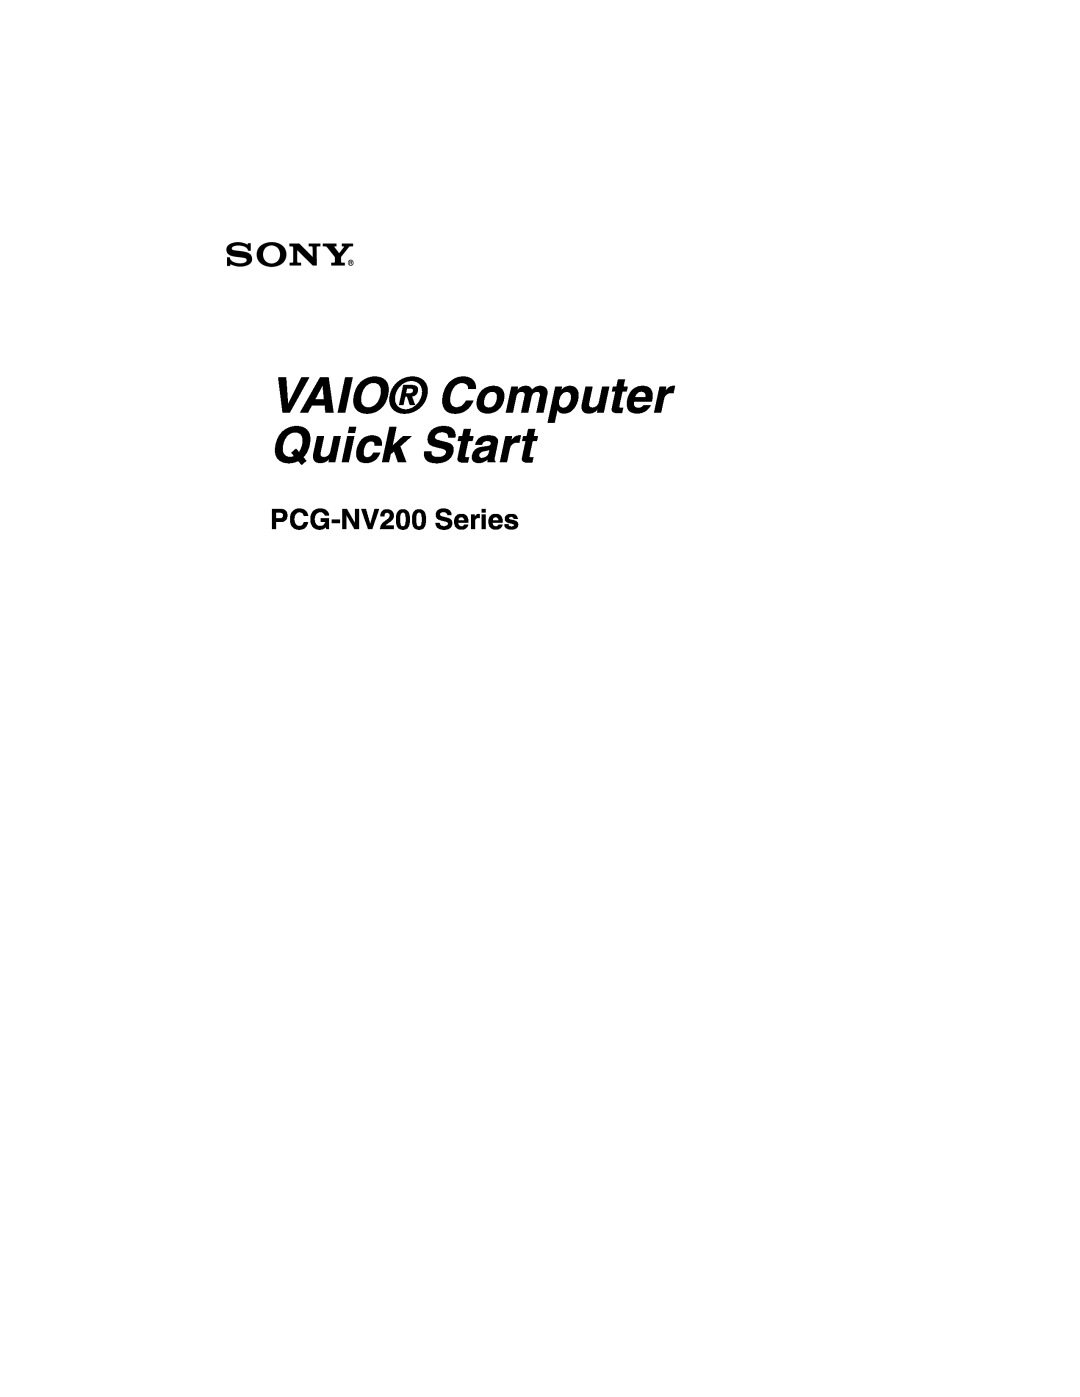 Sony quick start VAIO Computer Quick Start, PCG-NV200 Series 